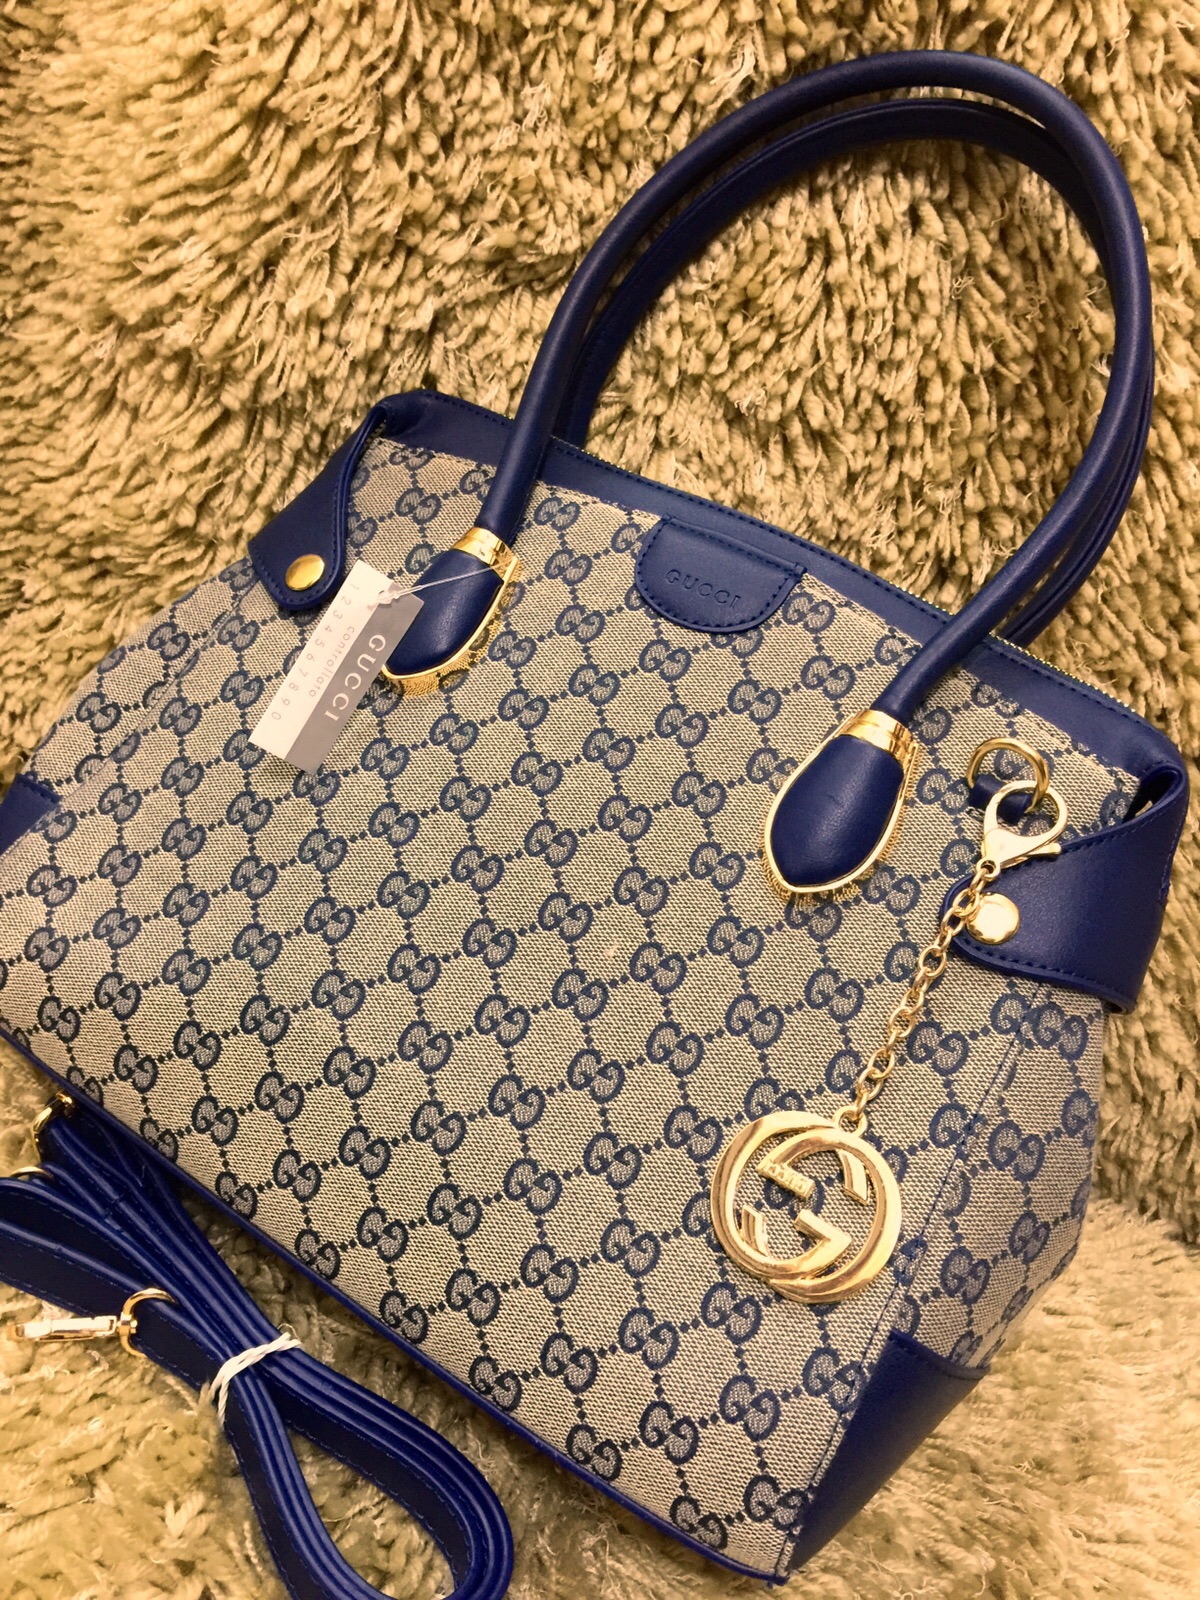 Gucci Handbags India - Buy Gucci Handbags At Dilli Bazar